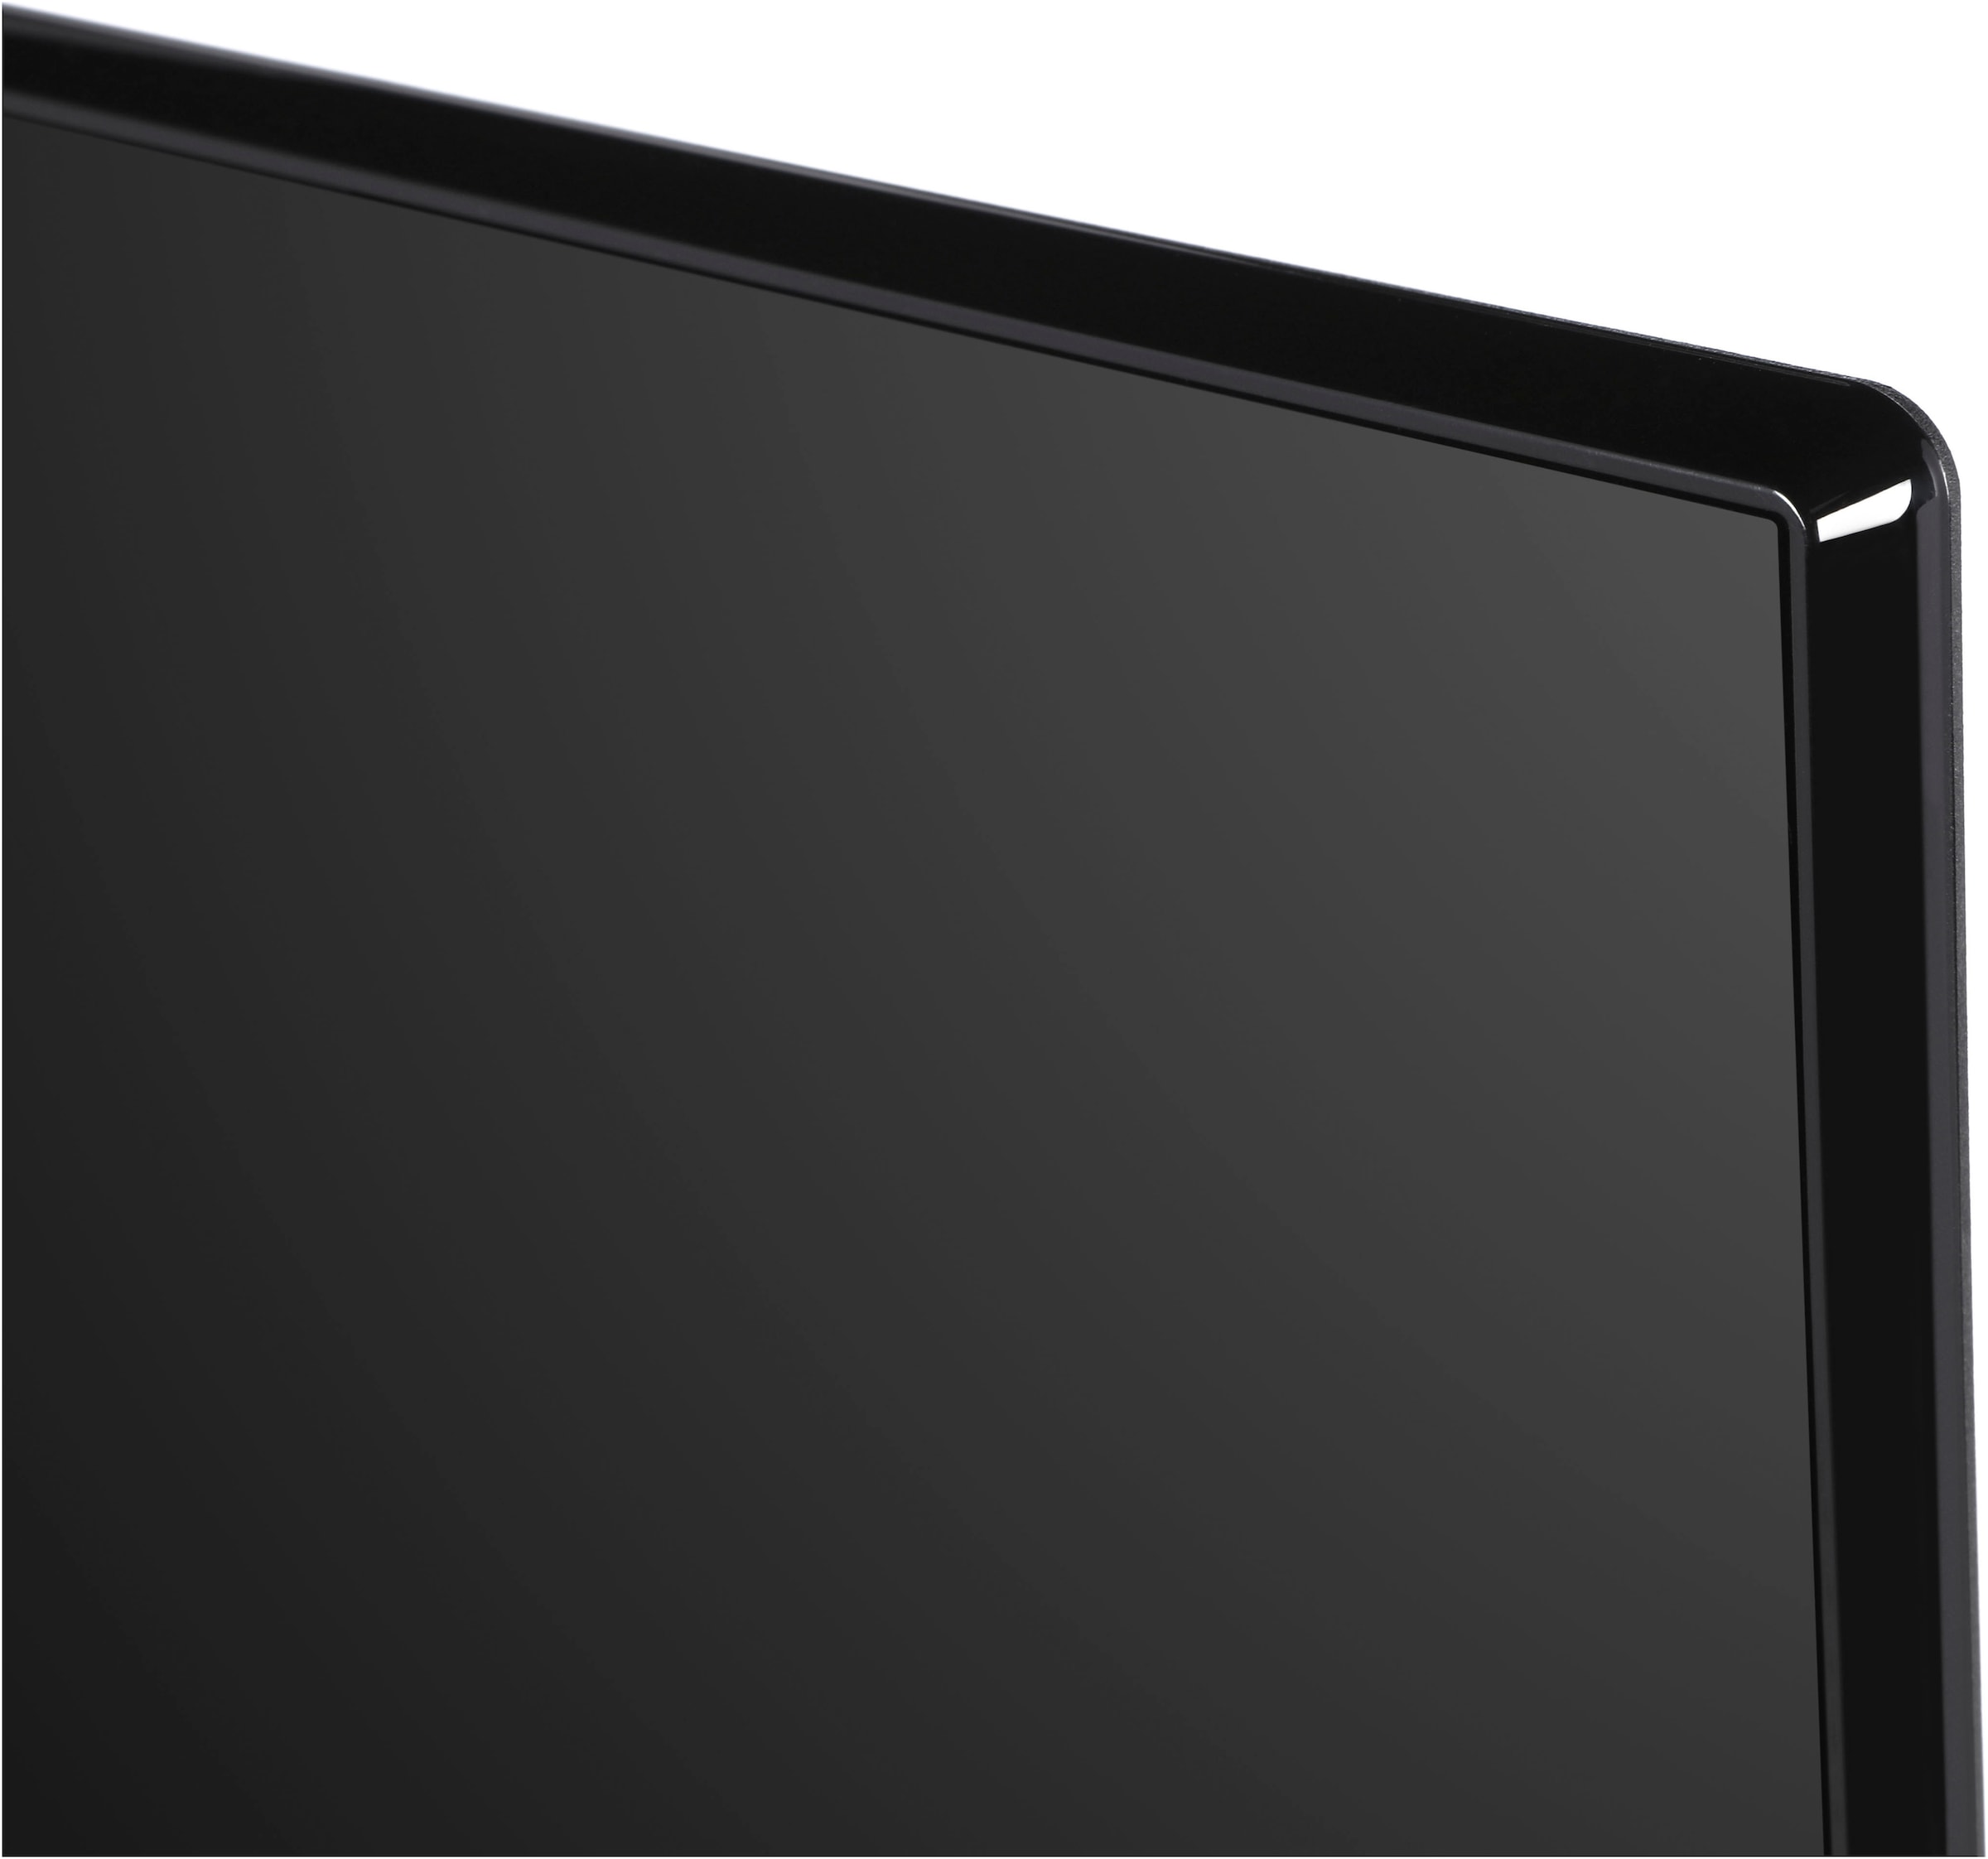 Toshiba LED-Fernseher, 126 cm/50 Zoll, 4K Ultra HD, Smart-TV